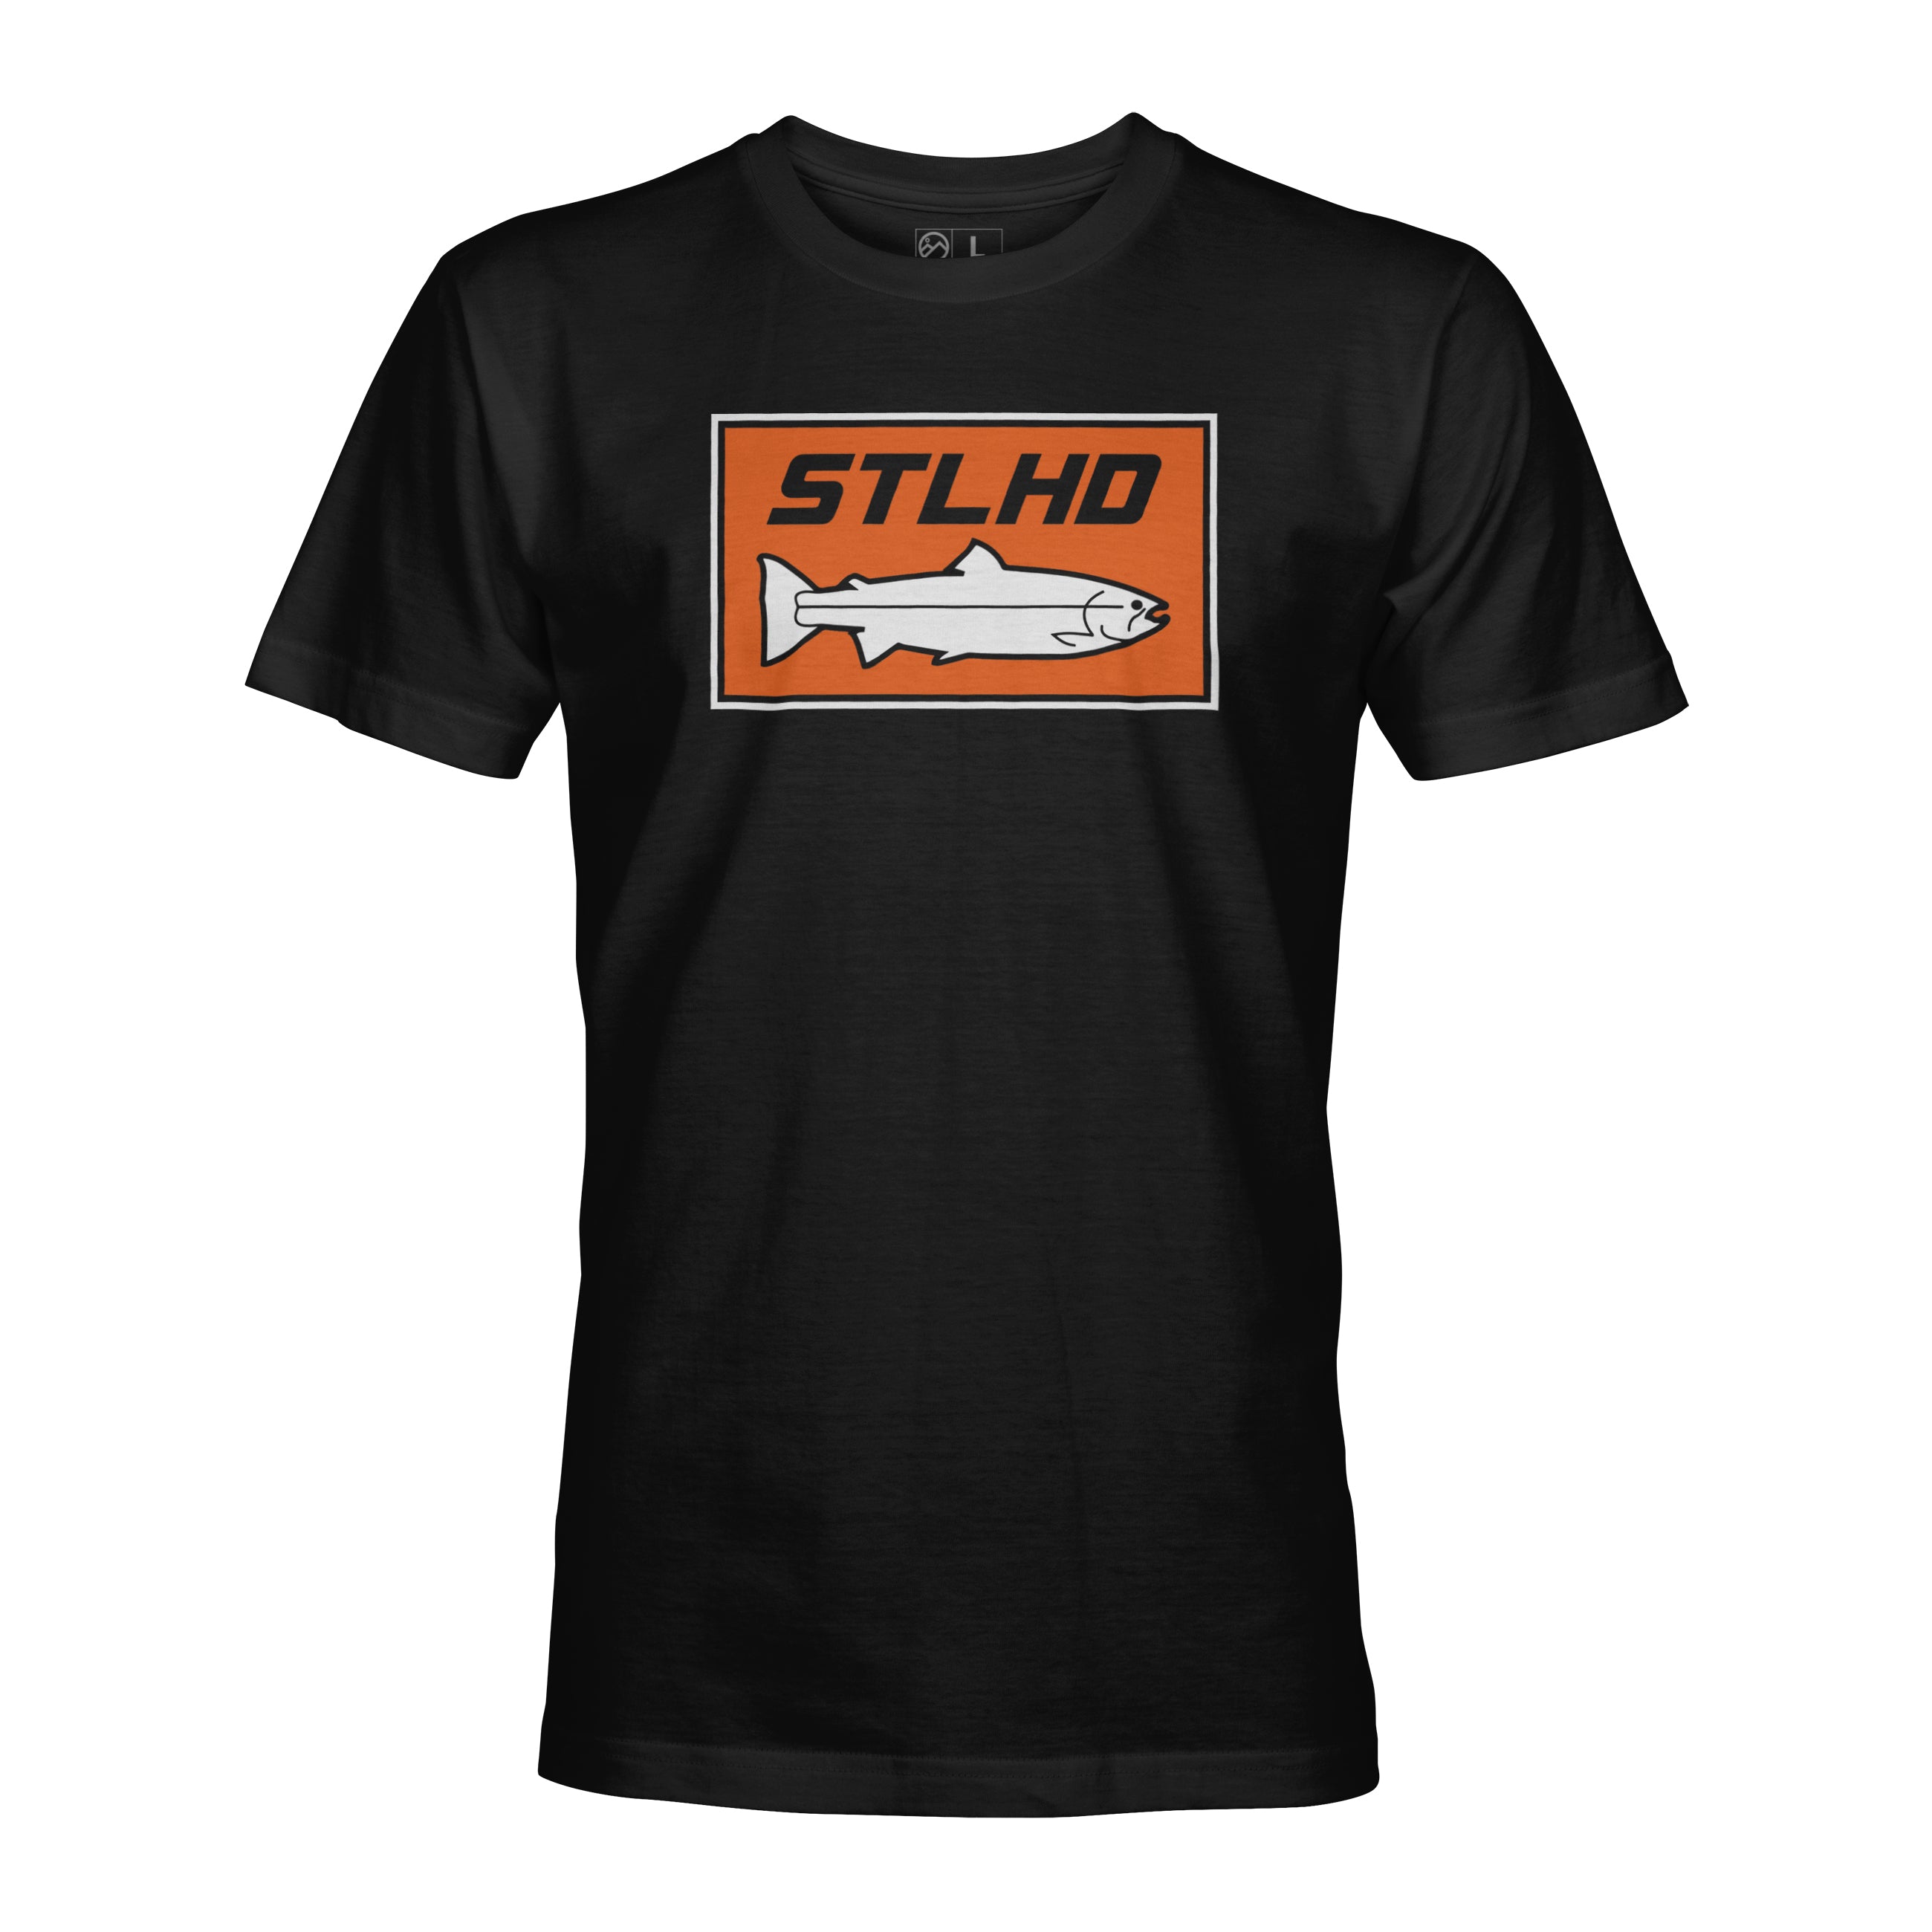 STLHD Men's Standard Logo Black T-Shirt